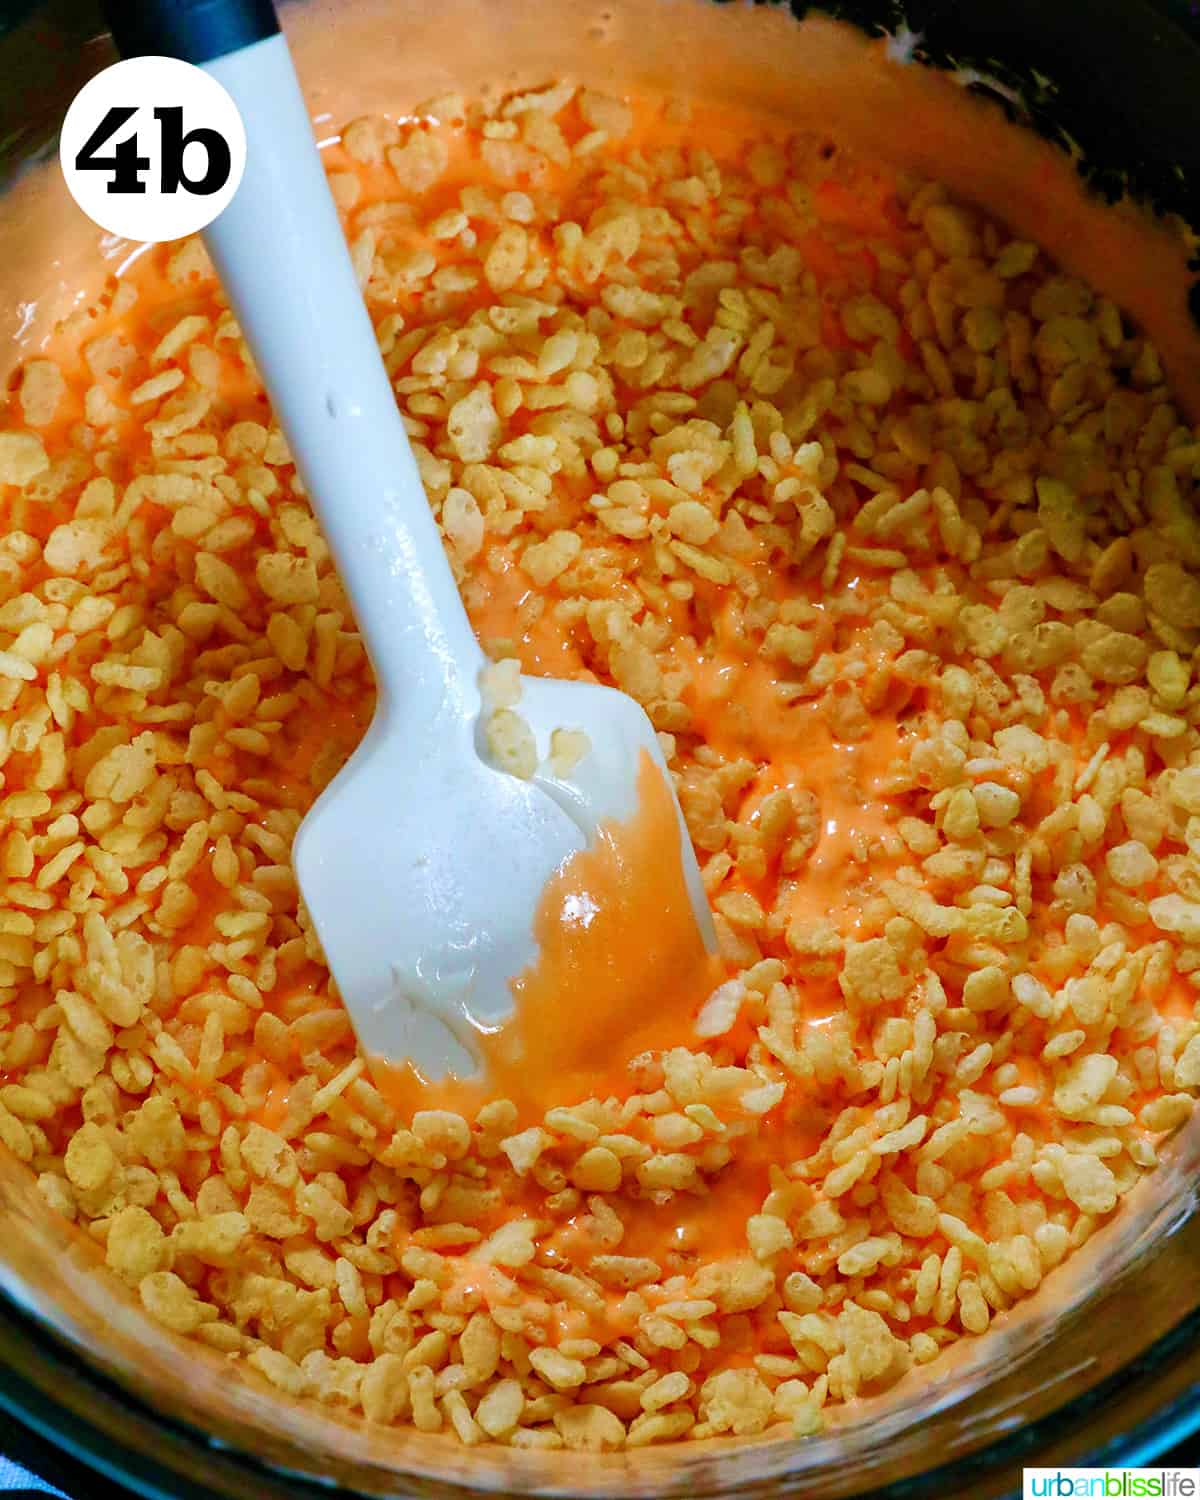 spatula stirring rice krispies cereal in orange marshmallow mixture.